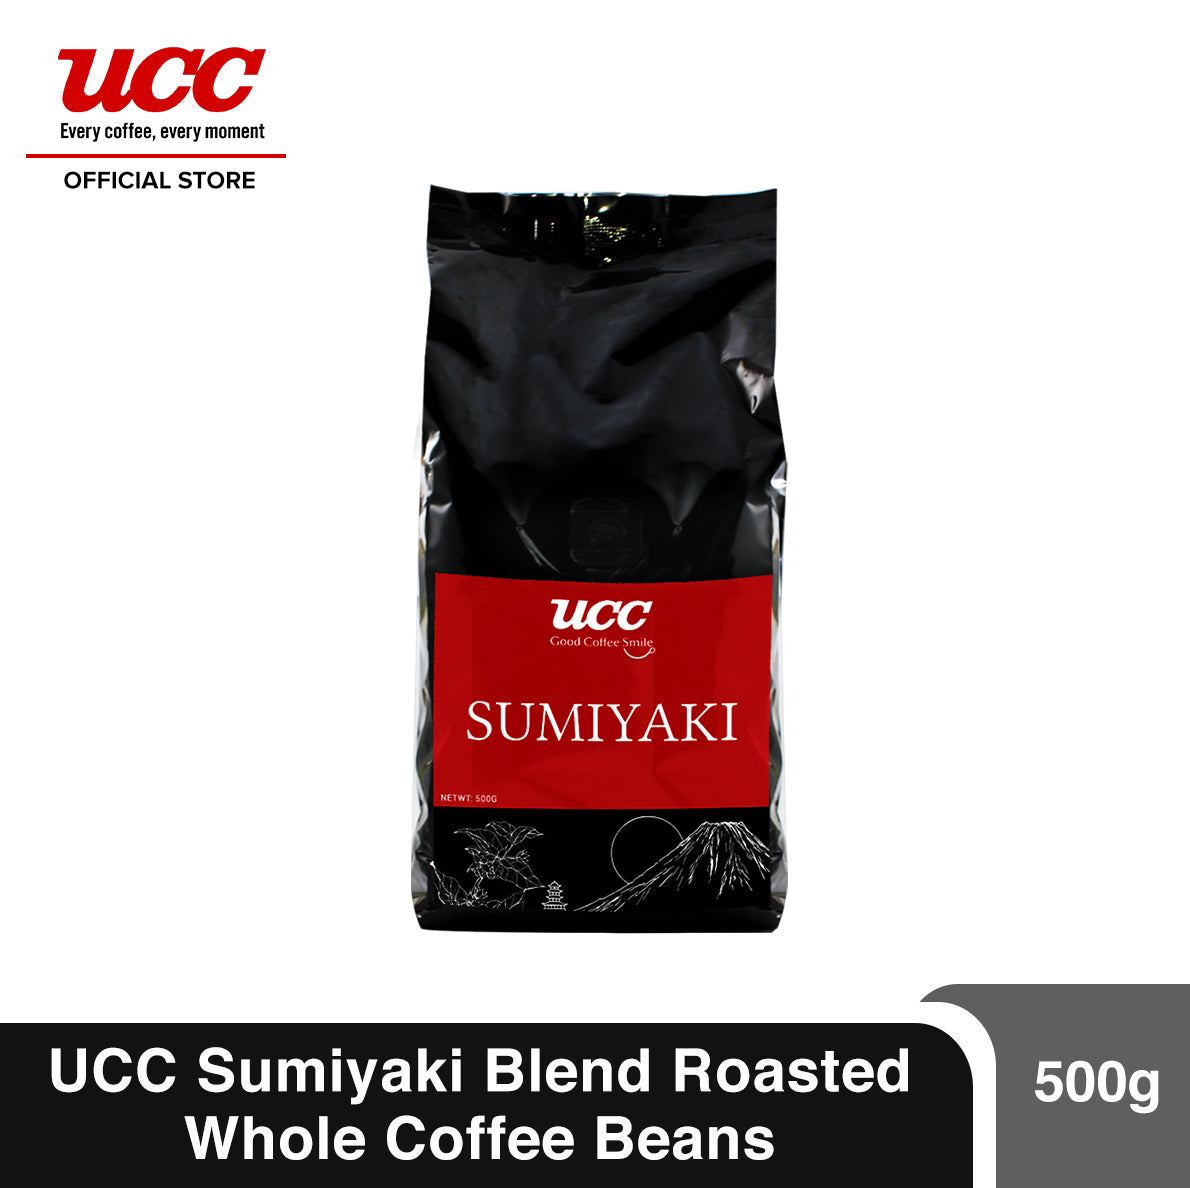 UCC Sumiyaki Roasted Whole Coffee Beans 500g